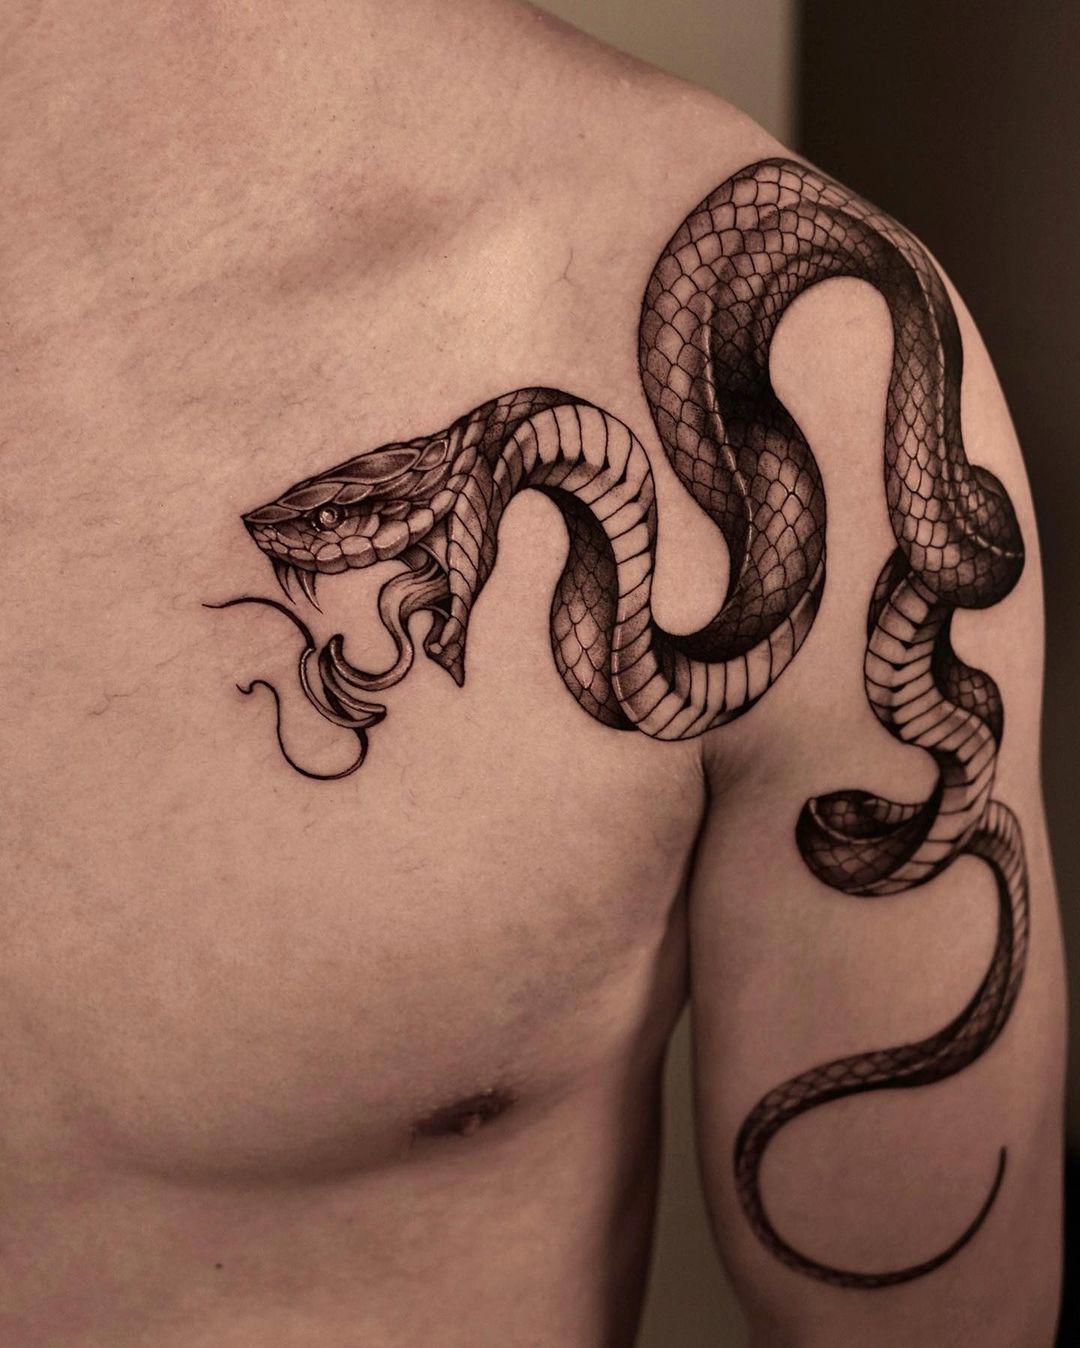 Tatuajes de serpientes para hombre